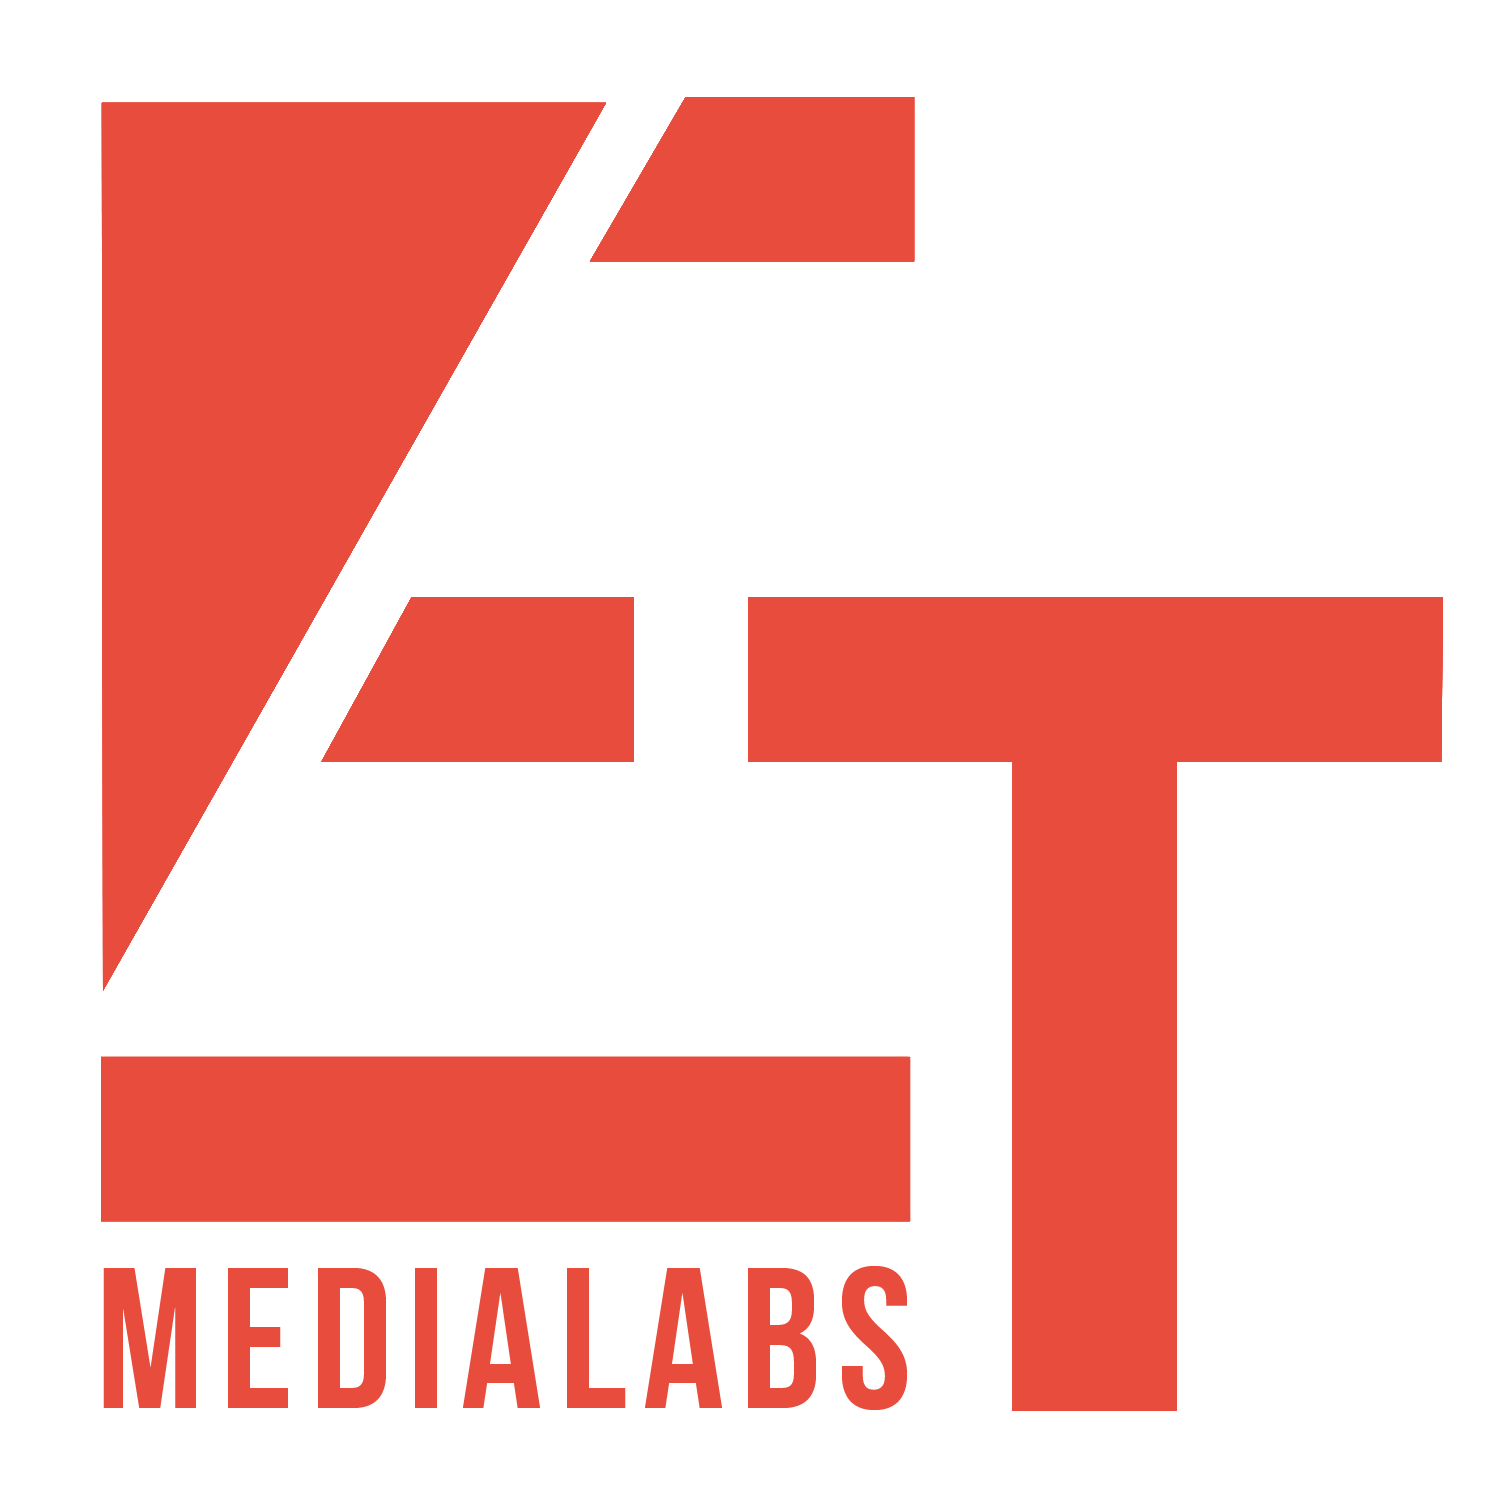 ET Medialabs